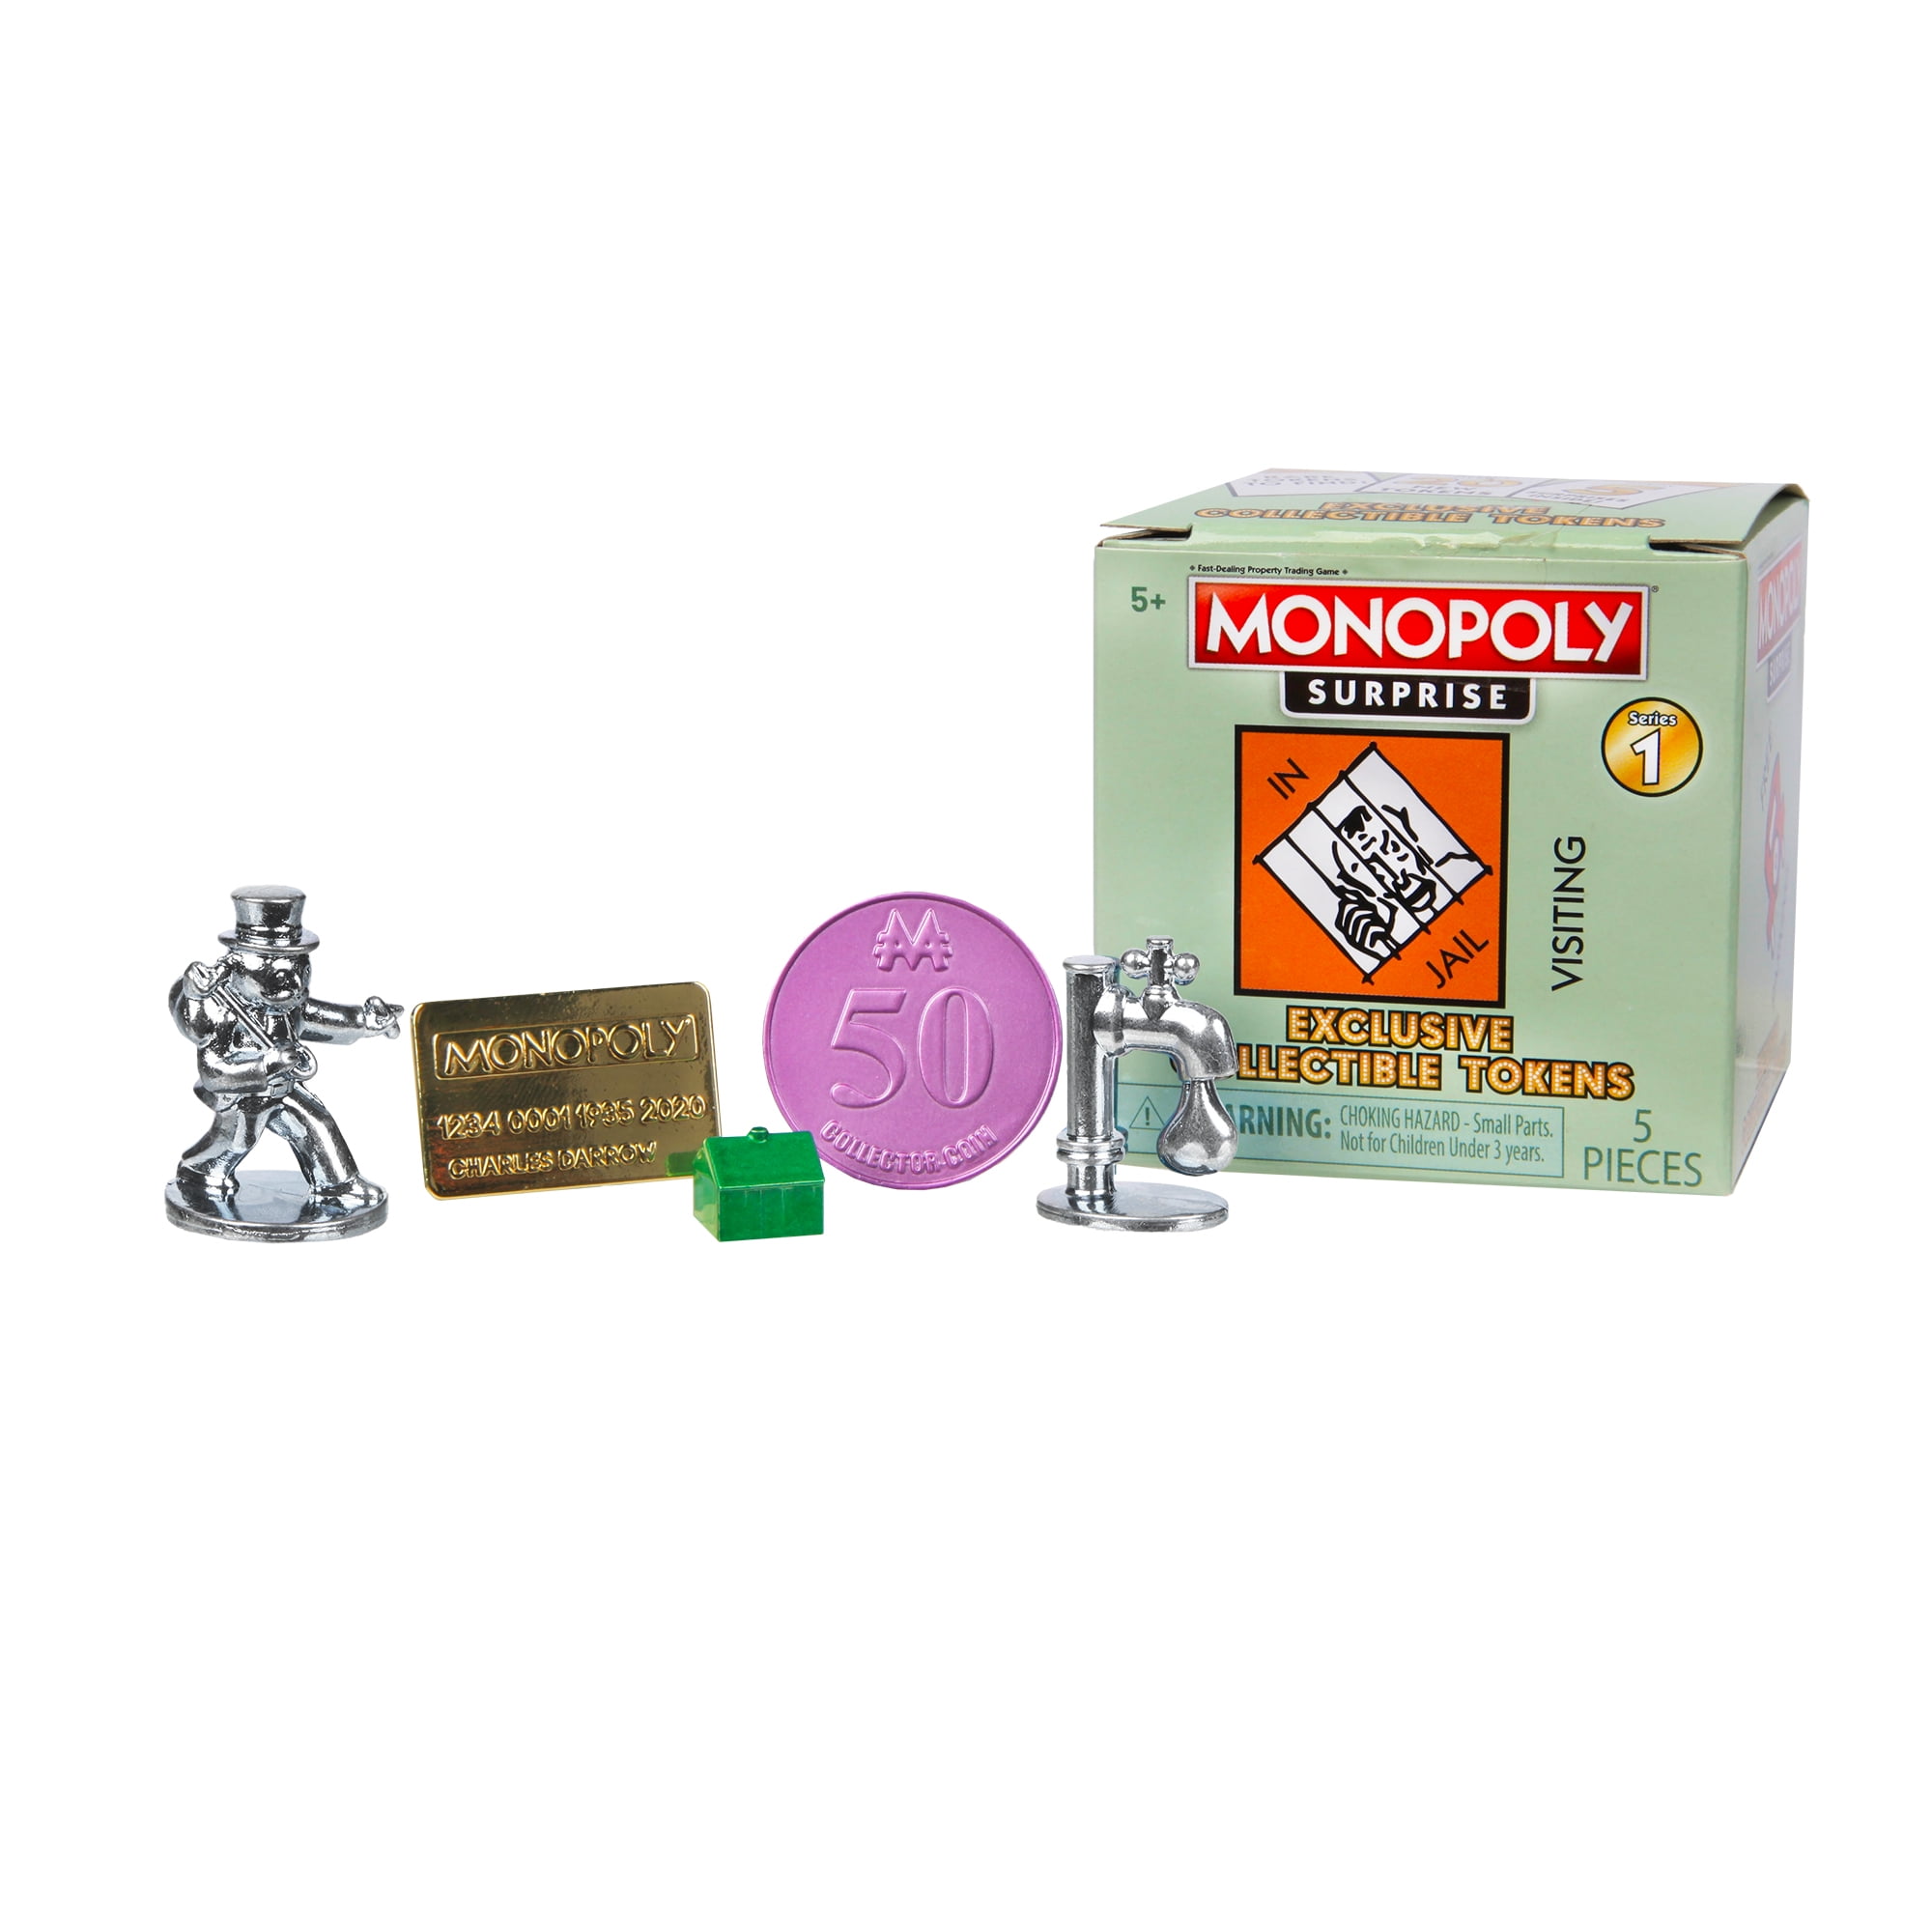 Monopoly Surprise Community Chest Gold 1st Place Beauty Trophy Token Game Piece 